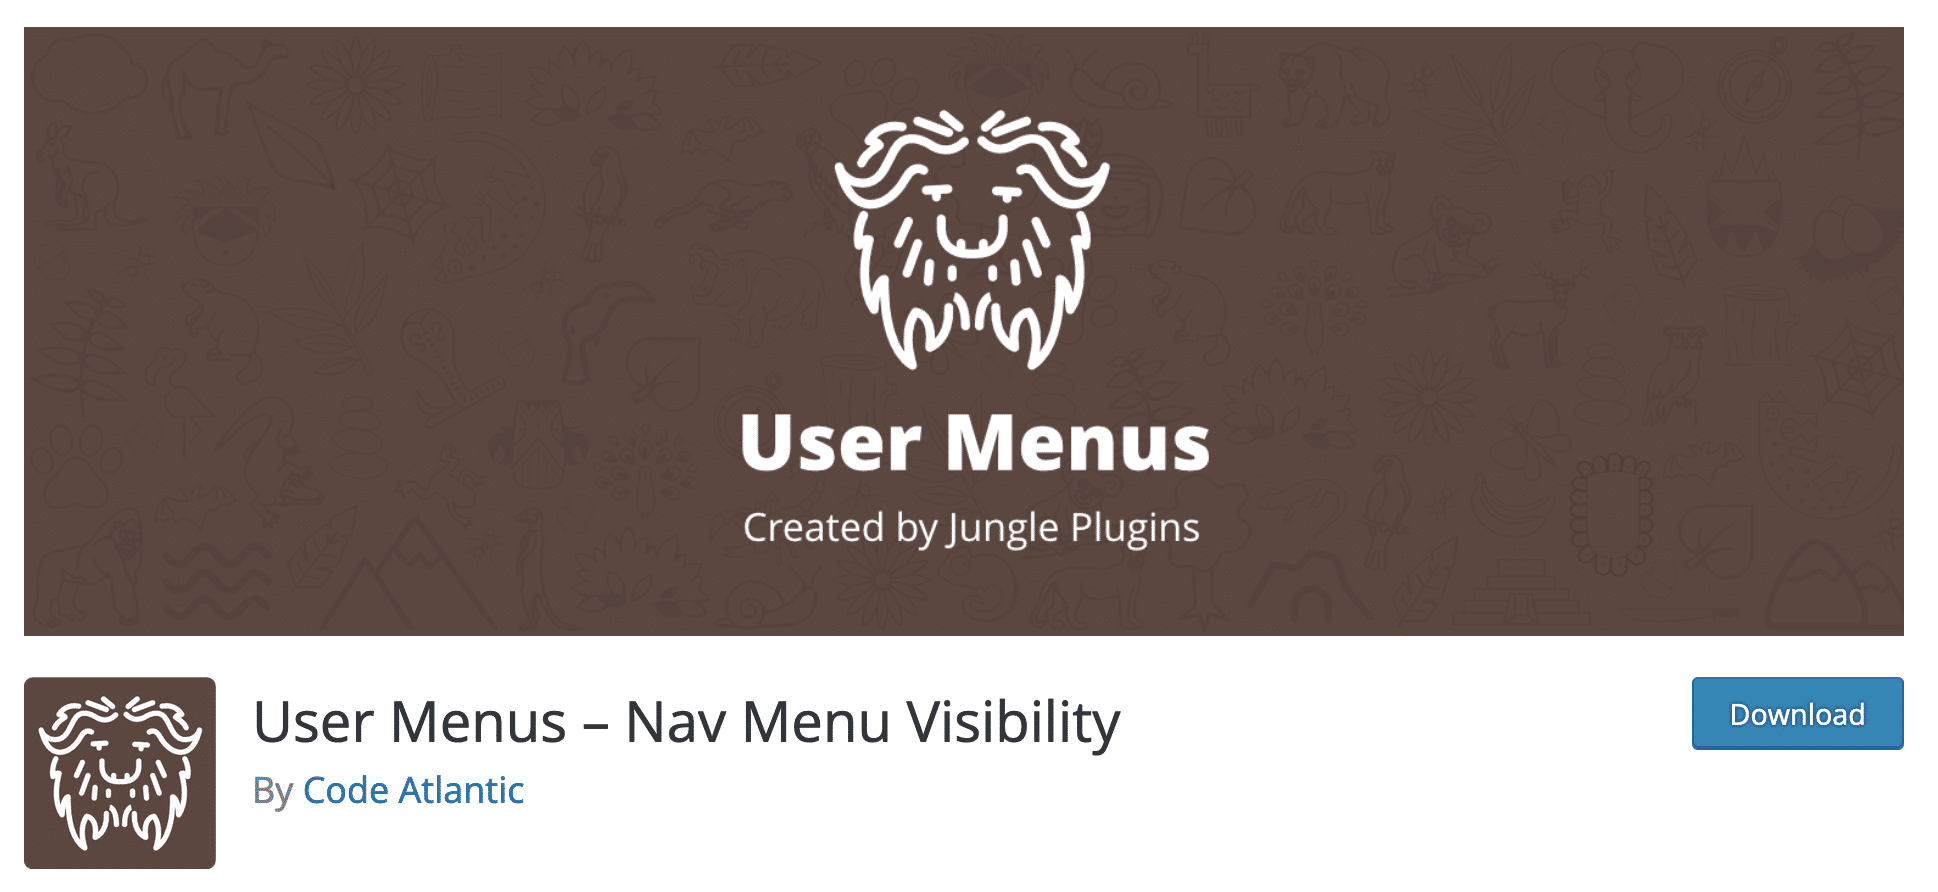 User Menus plugin download page. 